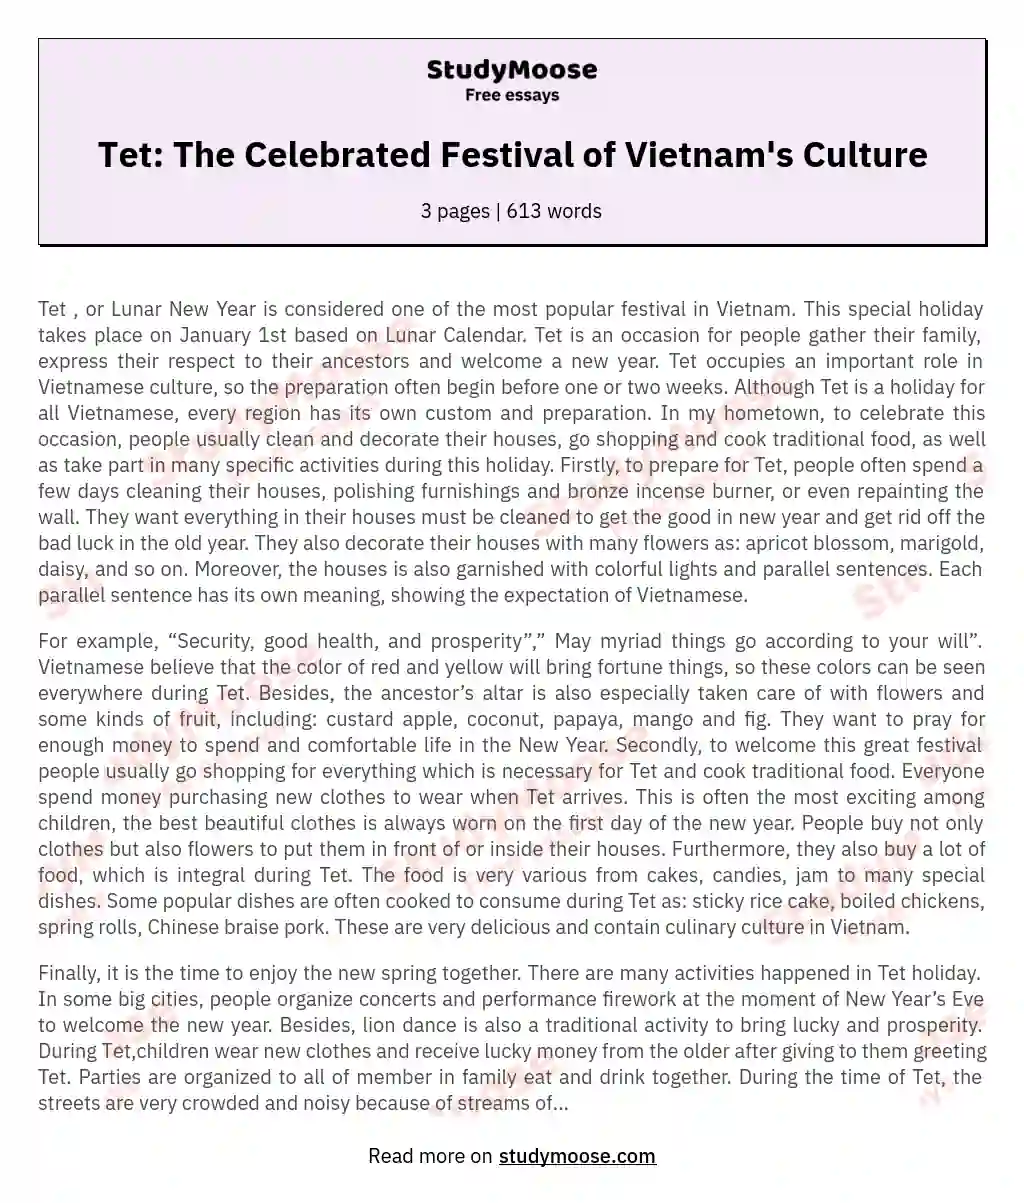 Tet: The Celebrated Festival of Vietnam's Culture essay